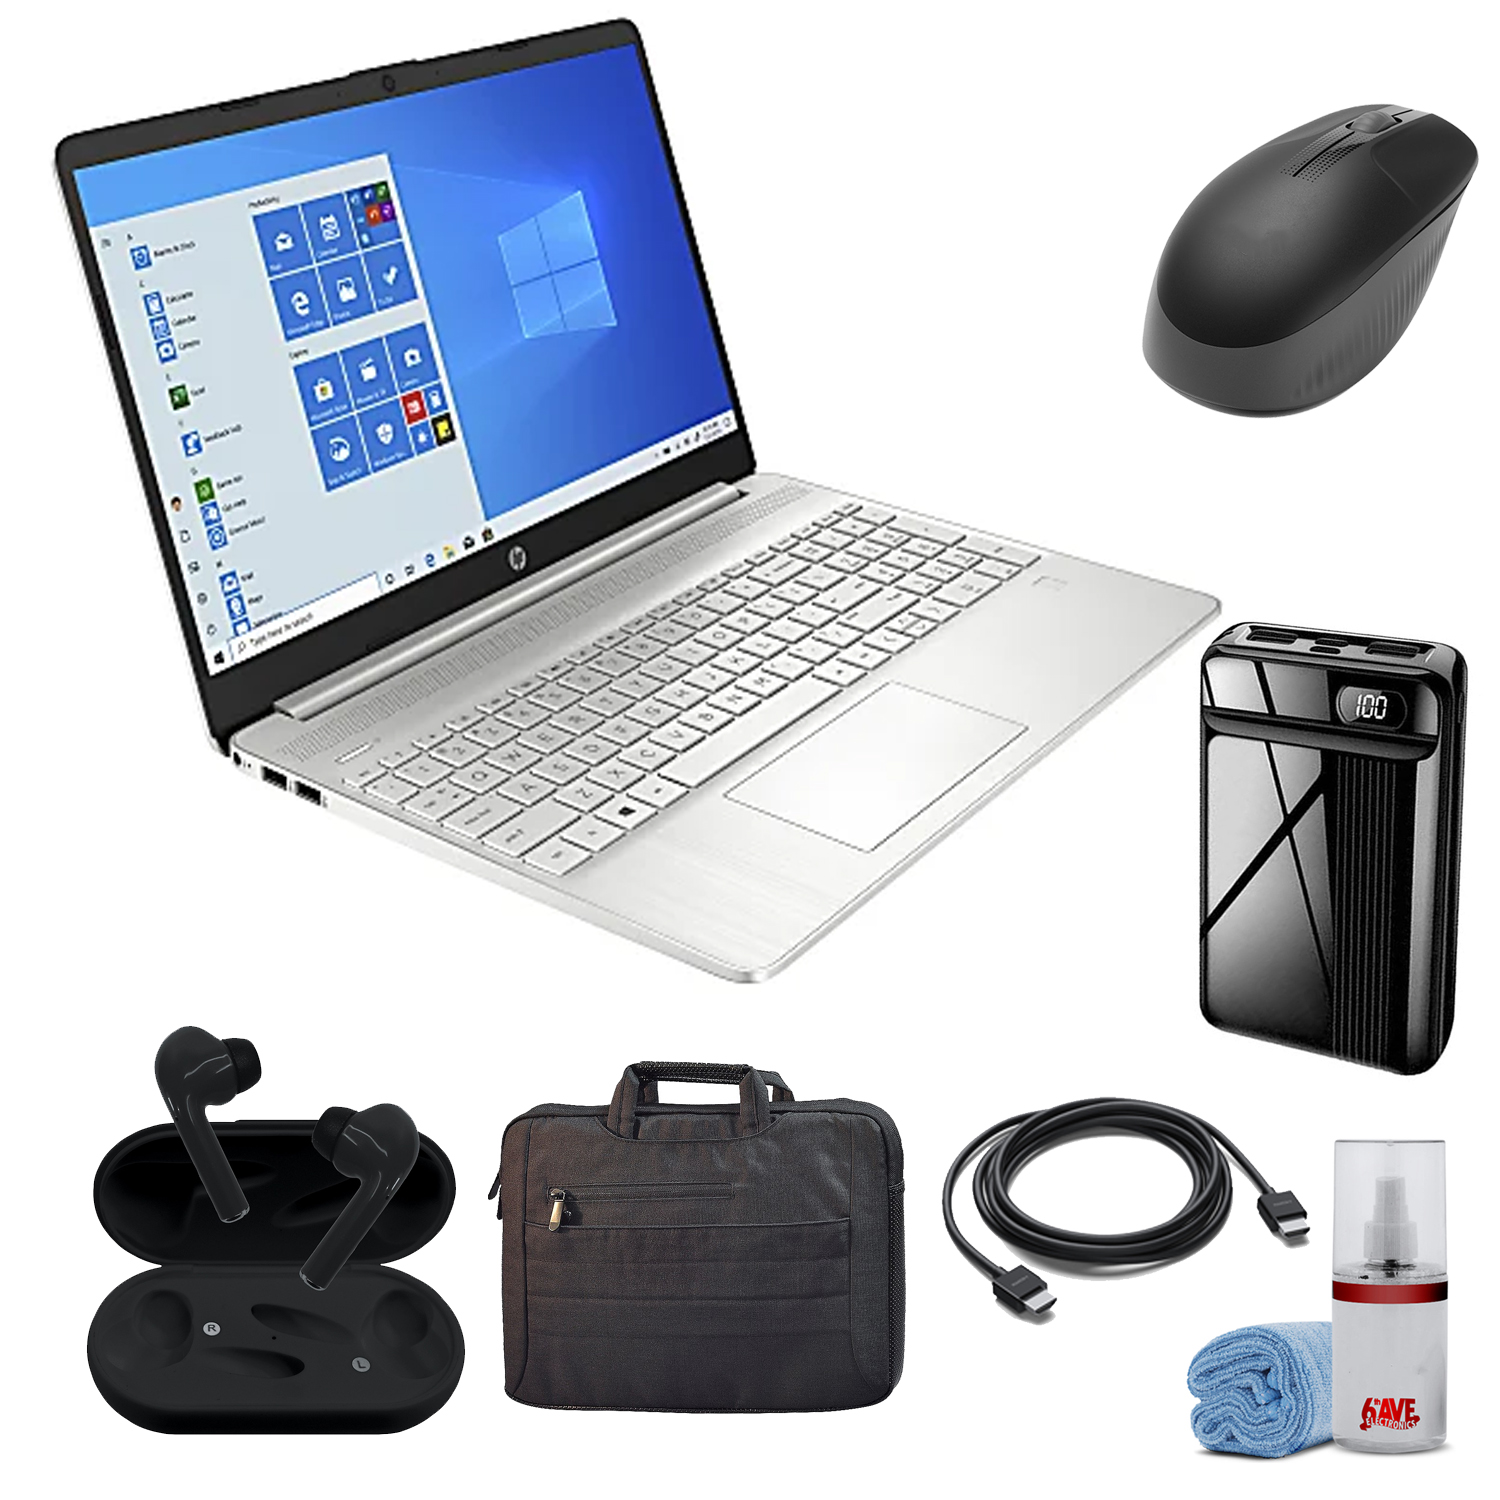 HP 15.6 inch Laptop (15-dy2091)-Silver W/Accessories 196068320027 | eBay